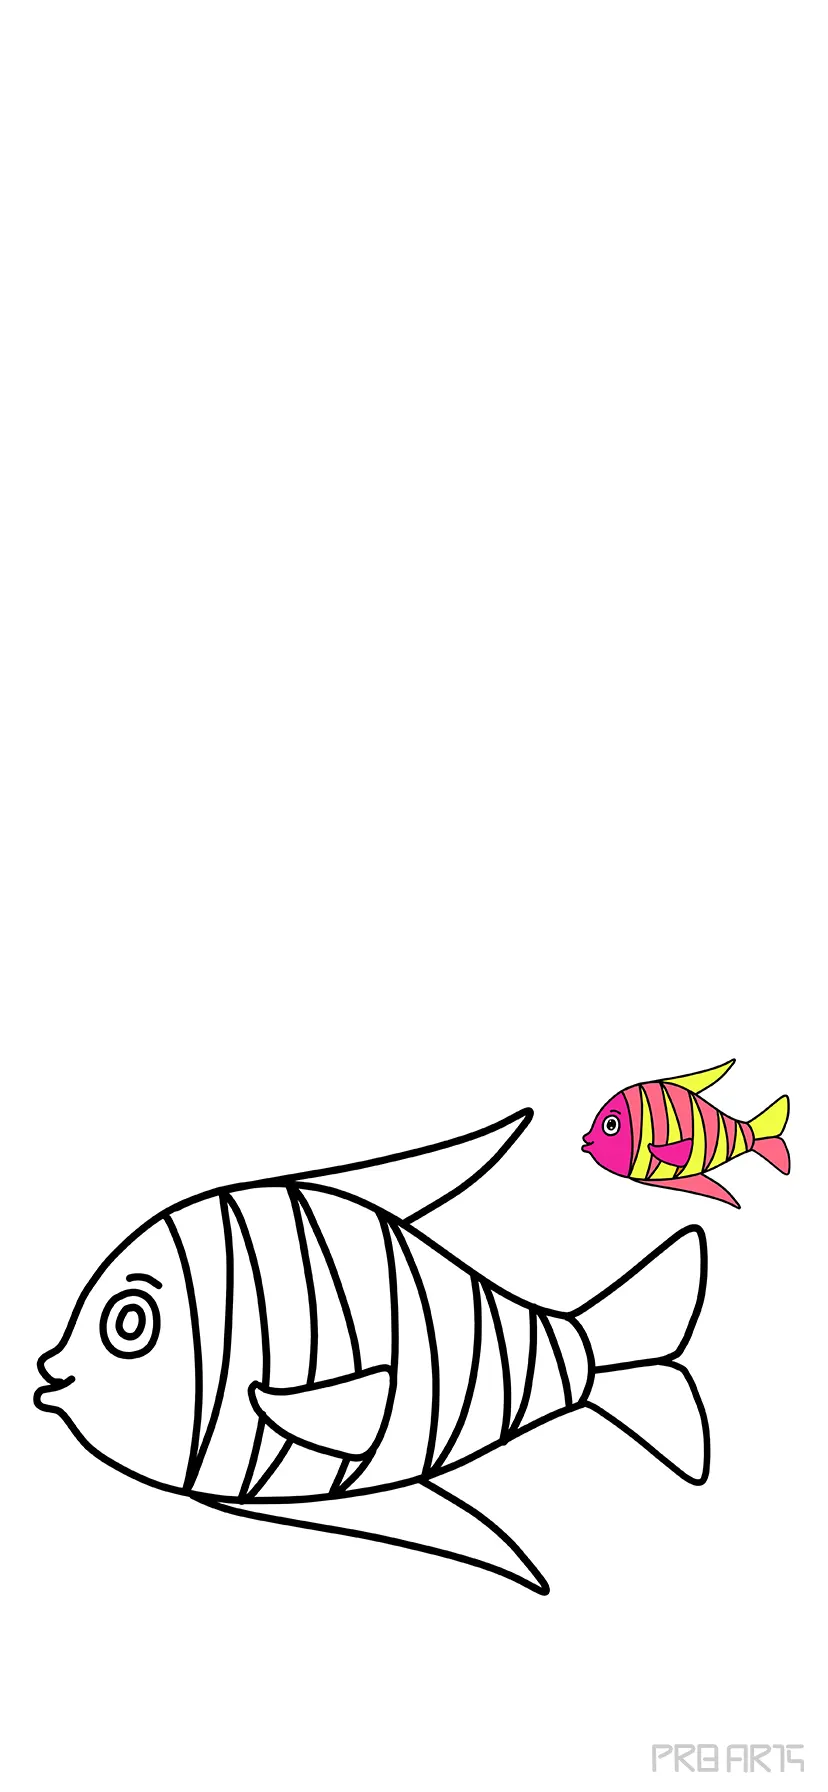 Sea fish drawing free image download